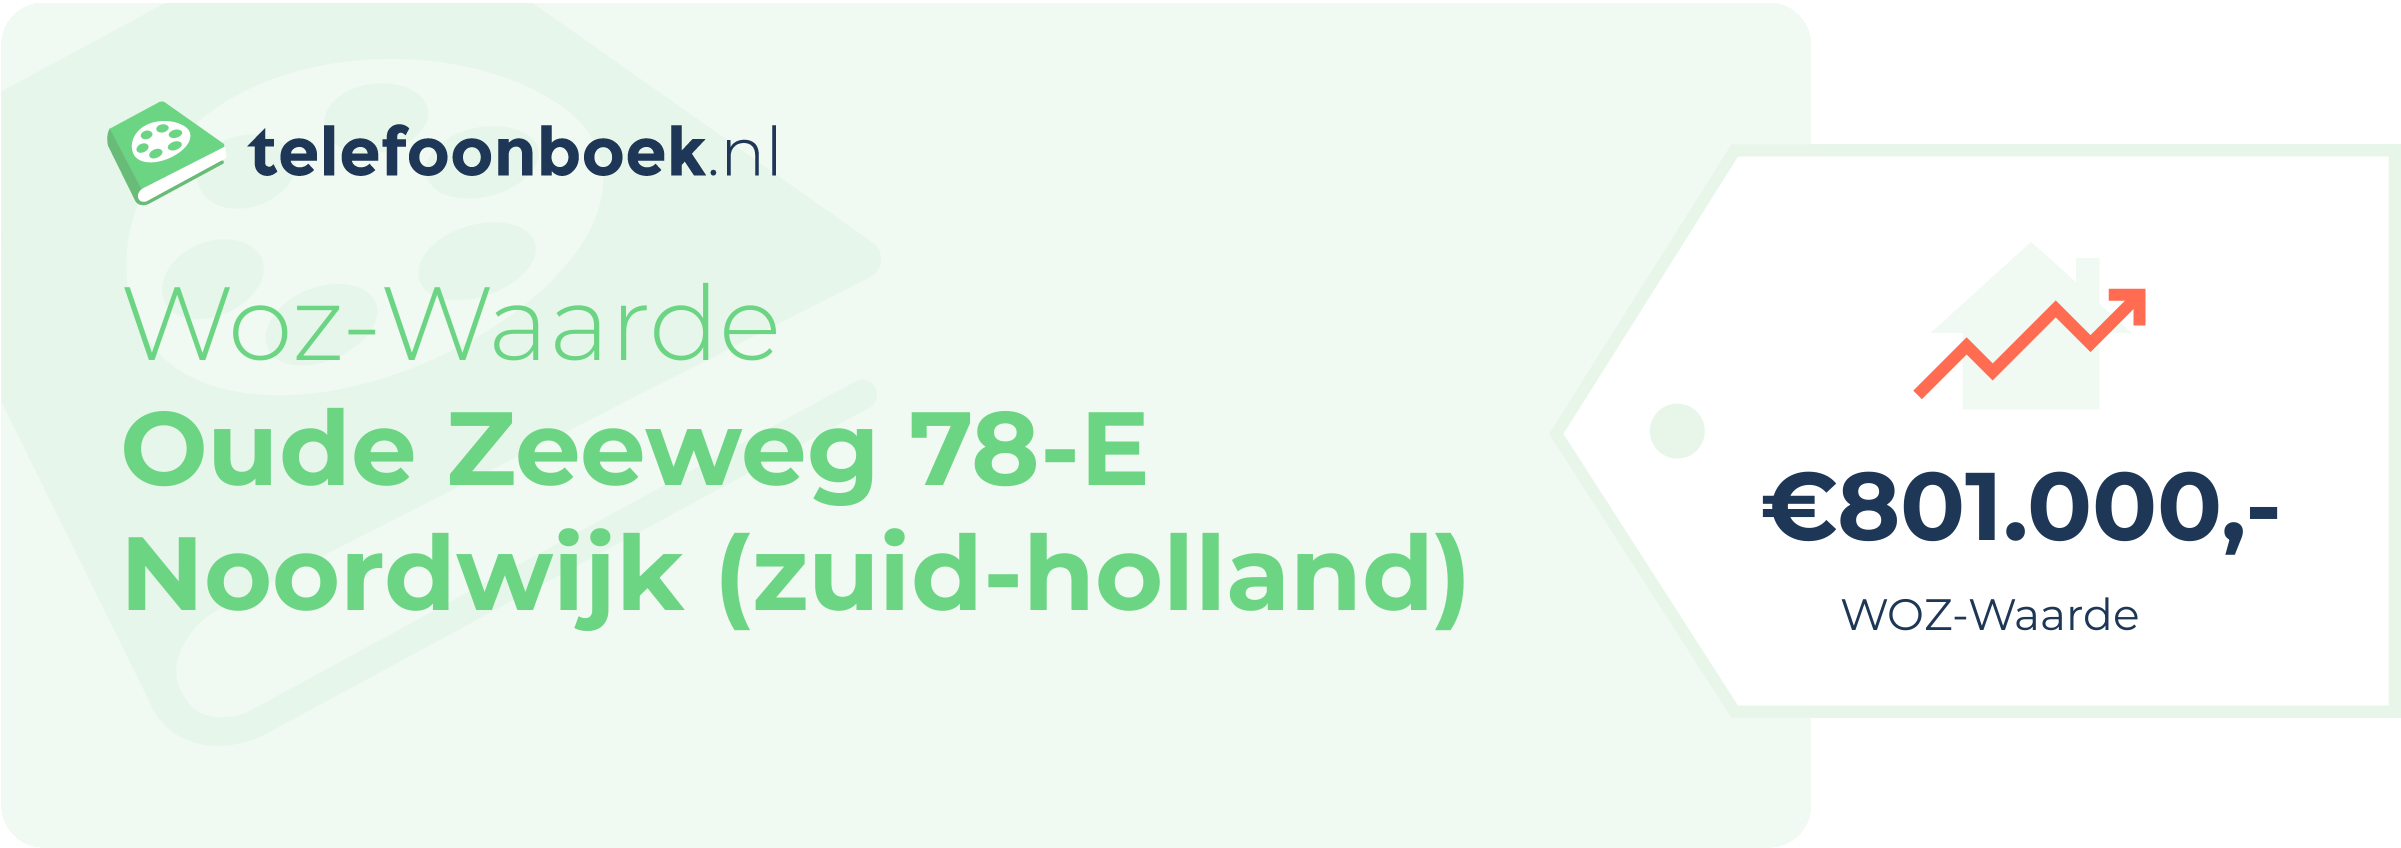 WOZ-waarde Oude Zeeweg 78-E Noordwijk (Zuid-Holland)